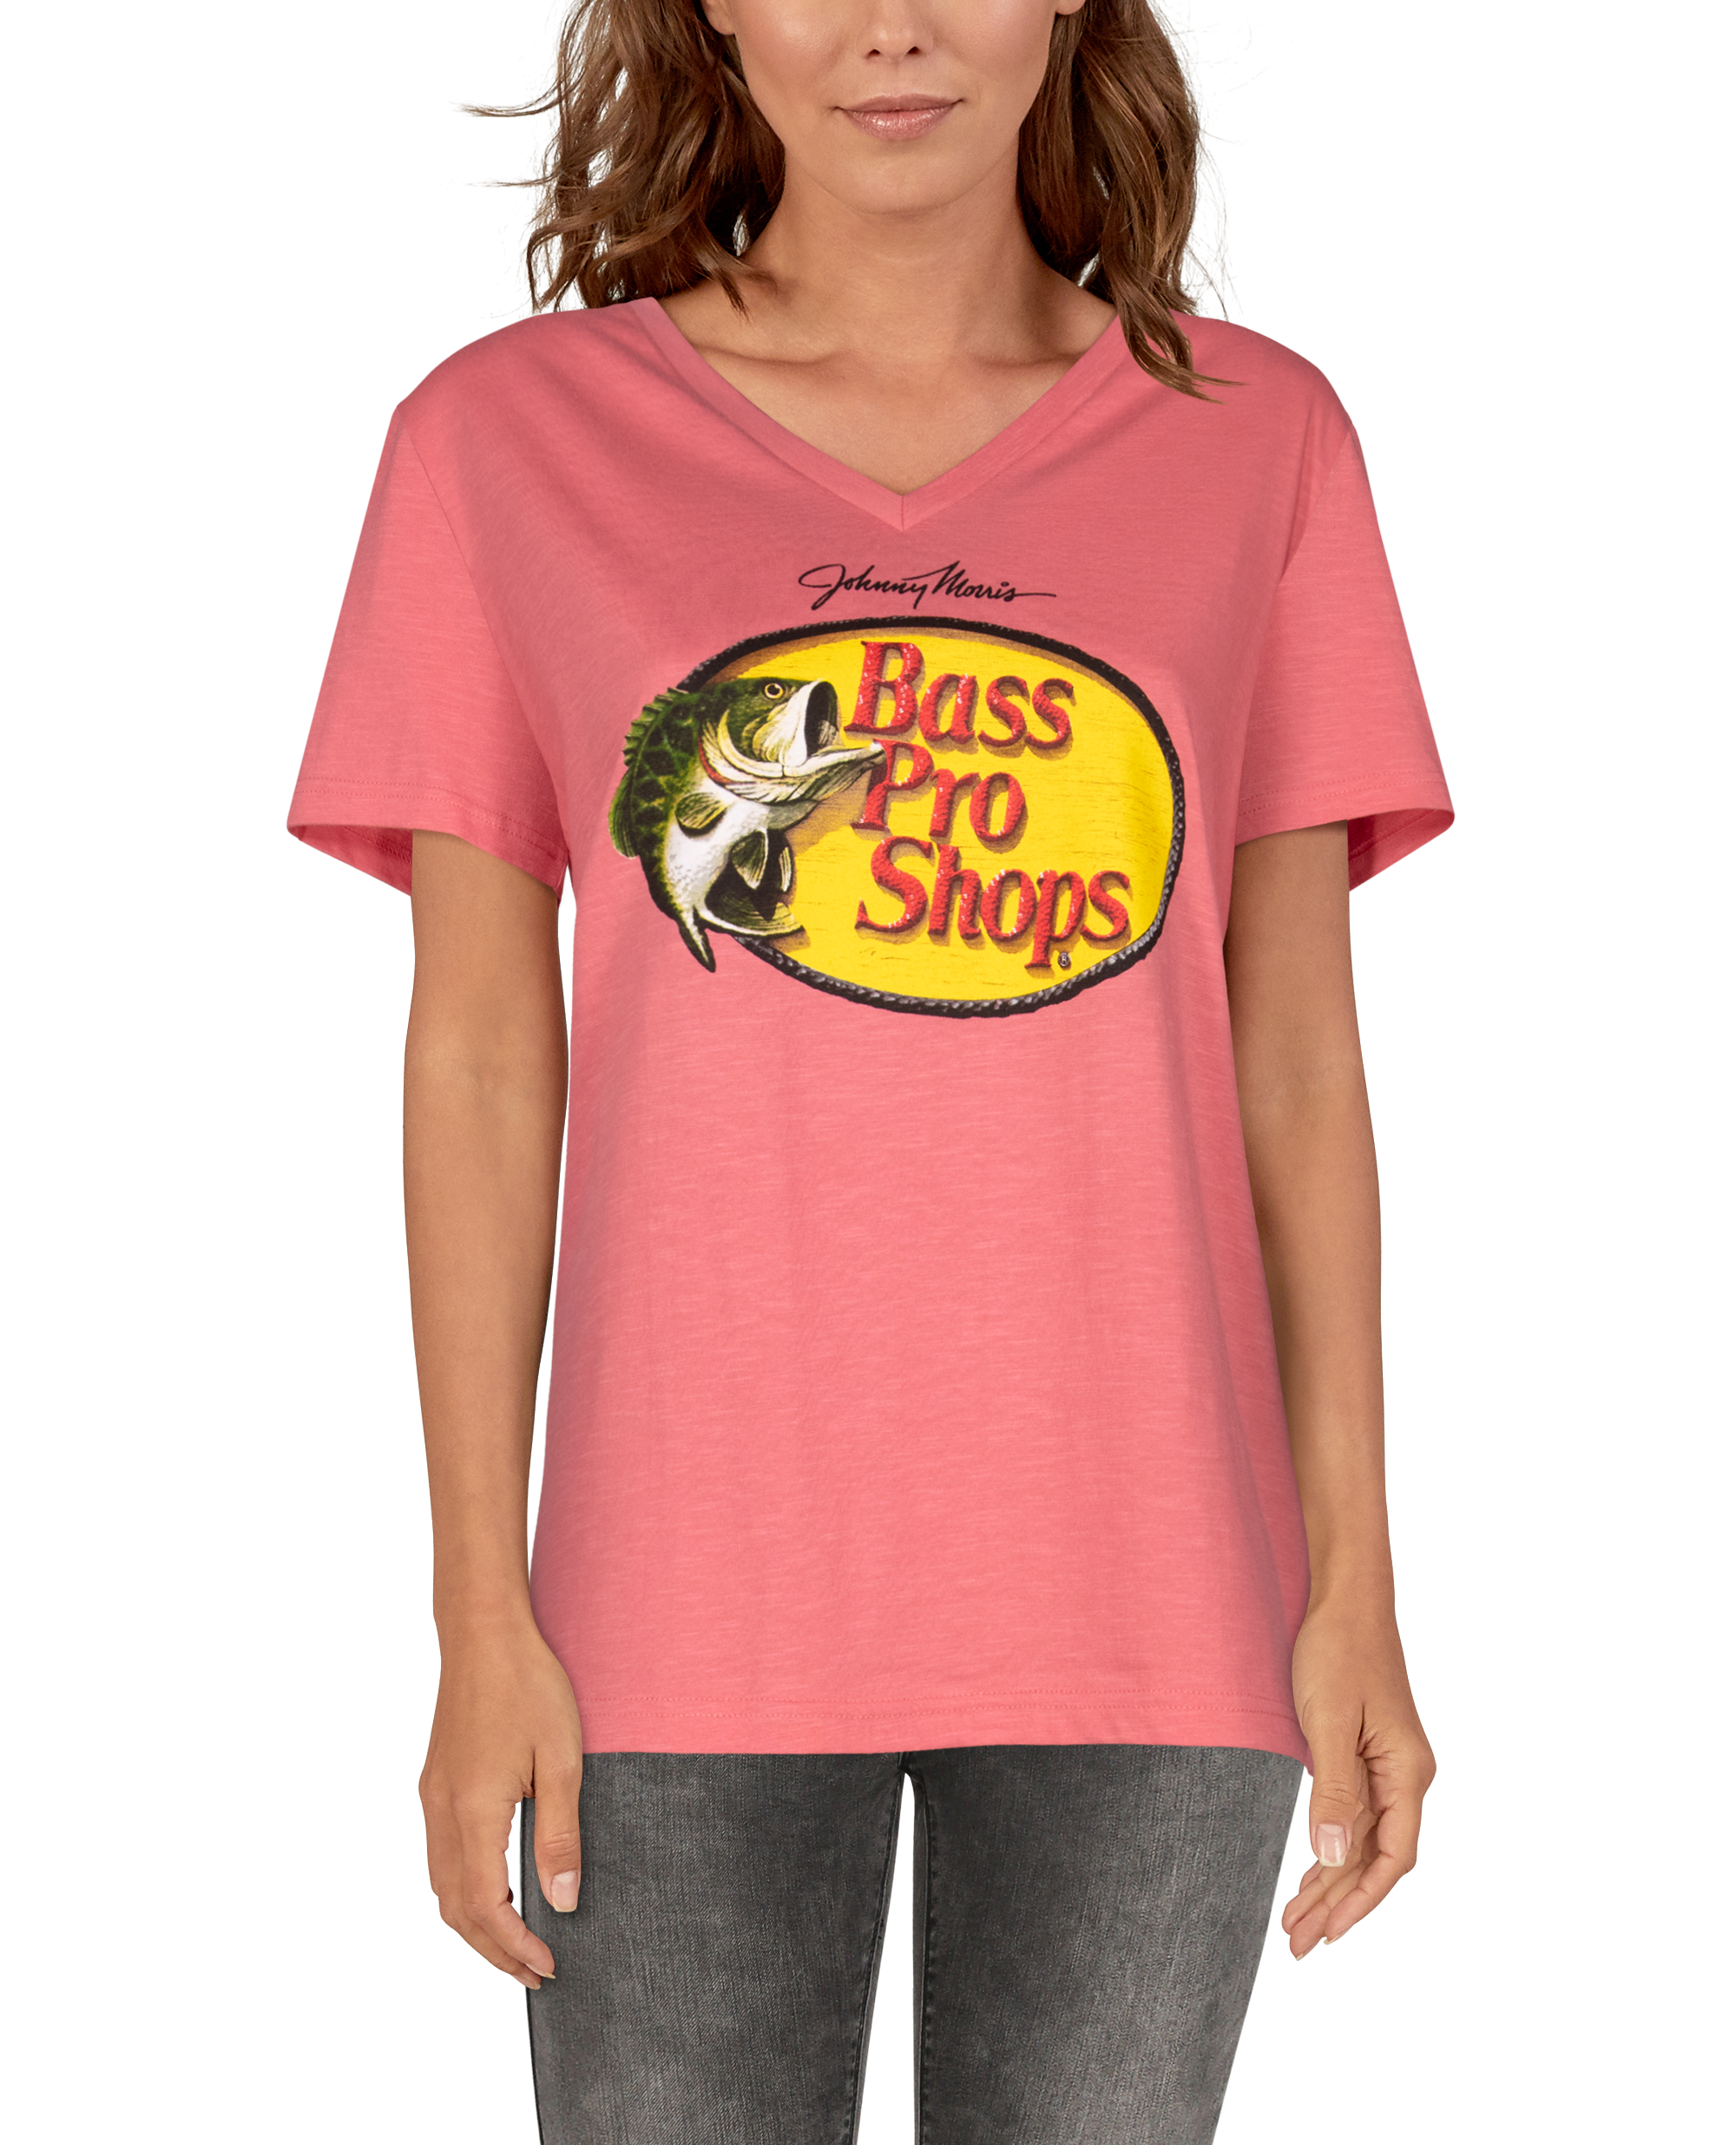 Bass Pro Shops Woodcut Logo V-Neck Short-Sleeve T-Shirt for Ladies - Pink - 2XL